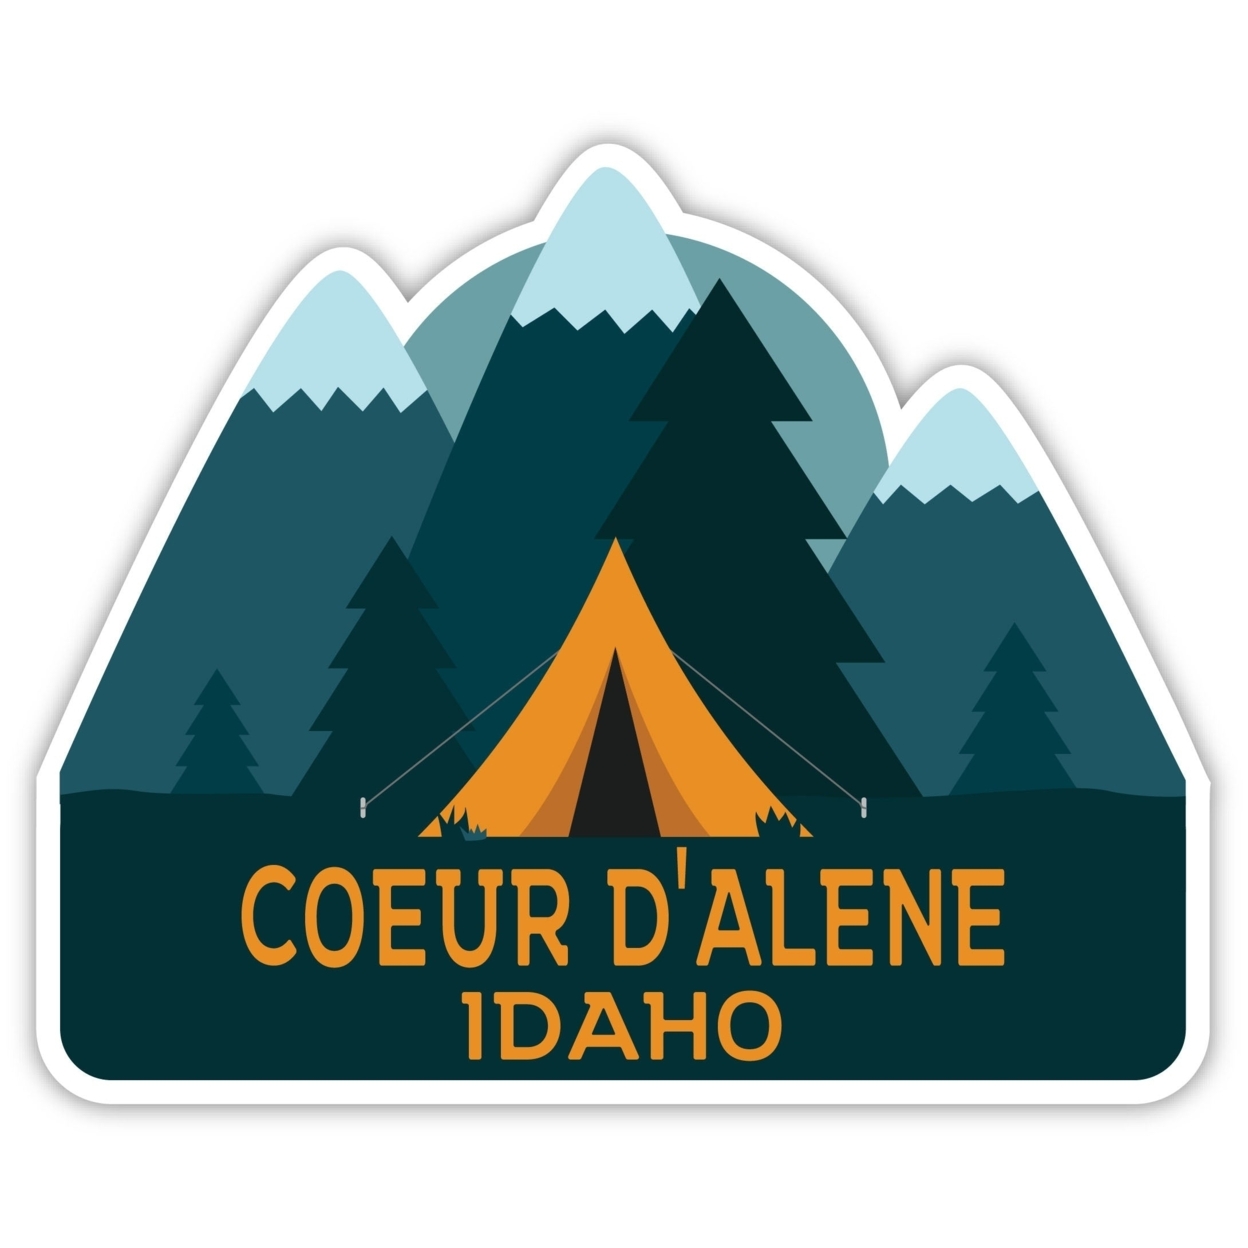 Coeur D'Alene Idaho Souvenir Decorative Stickers (Choose Theme And Size) - Single Unit, 10-Inch, Adventures Awaits